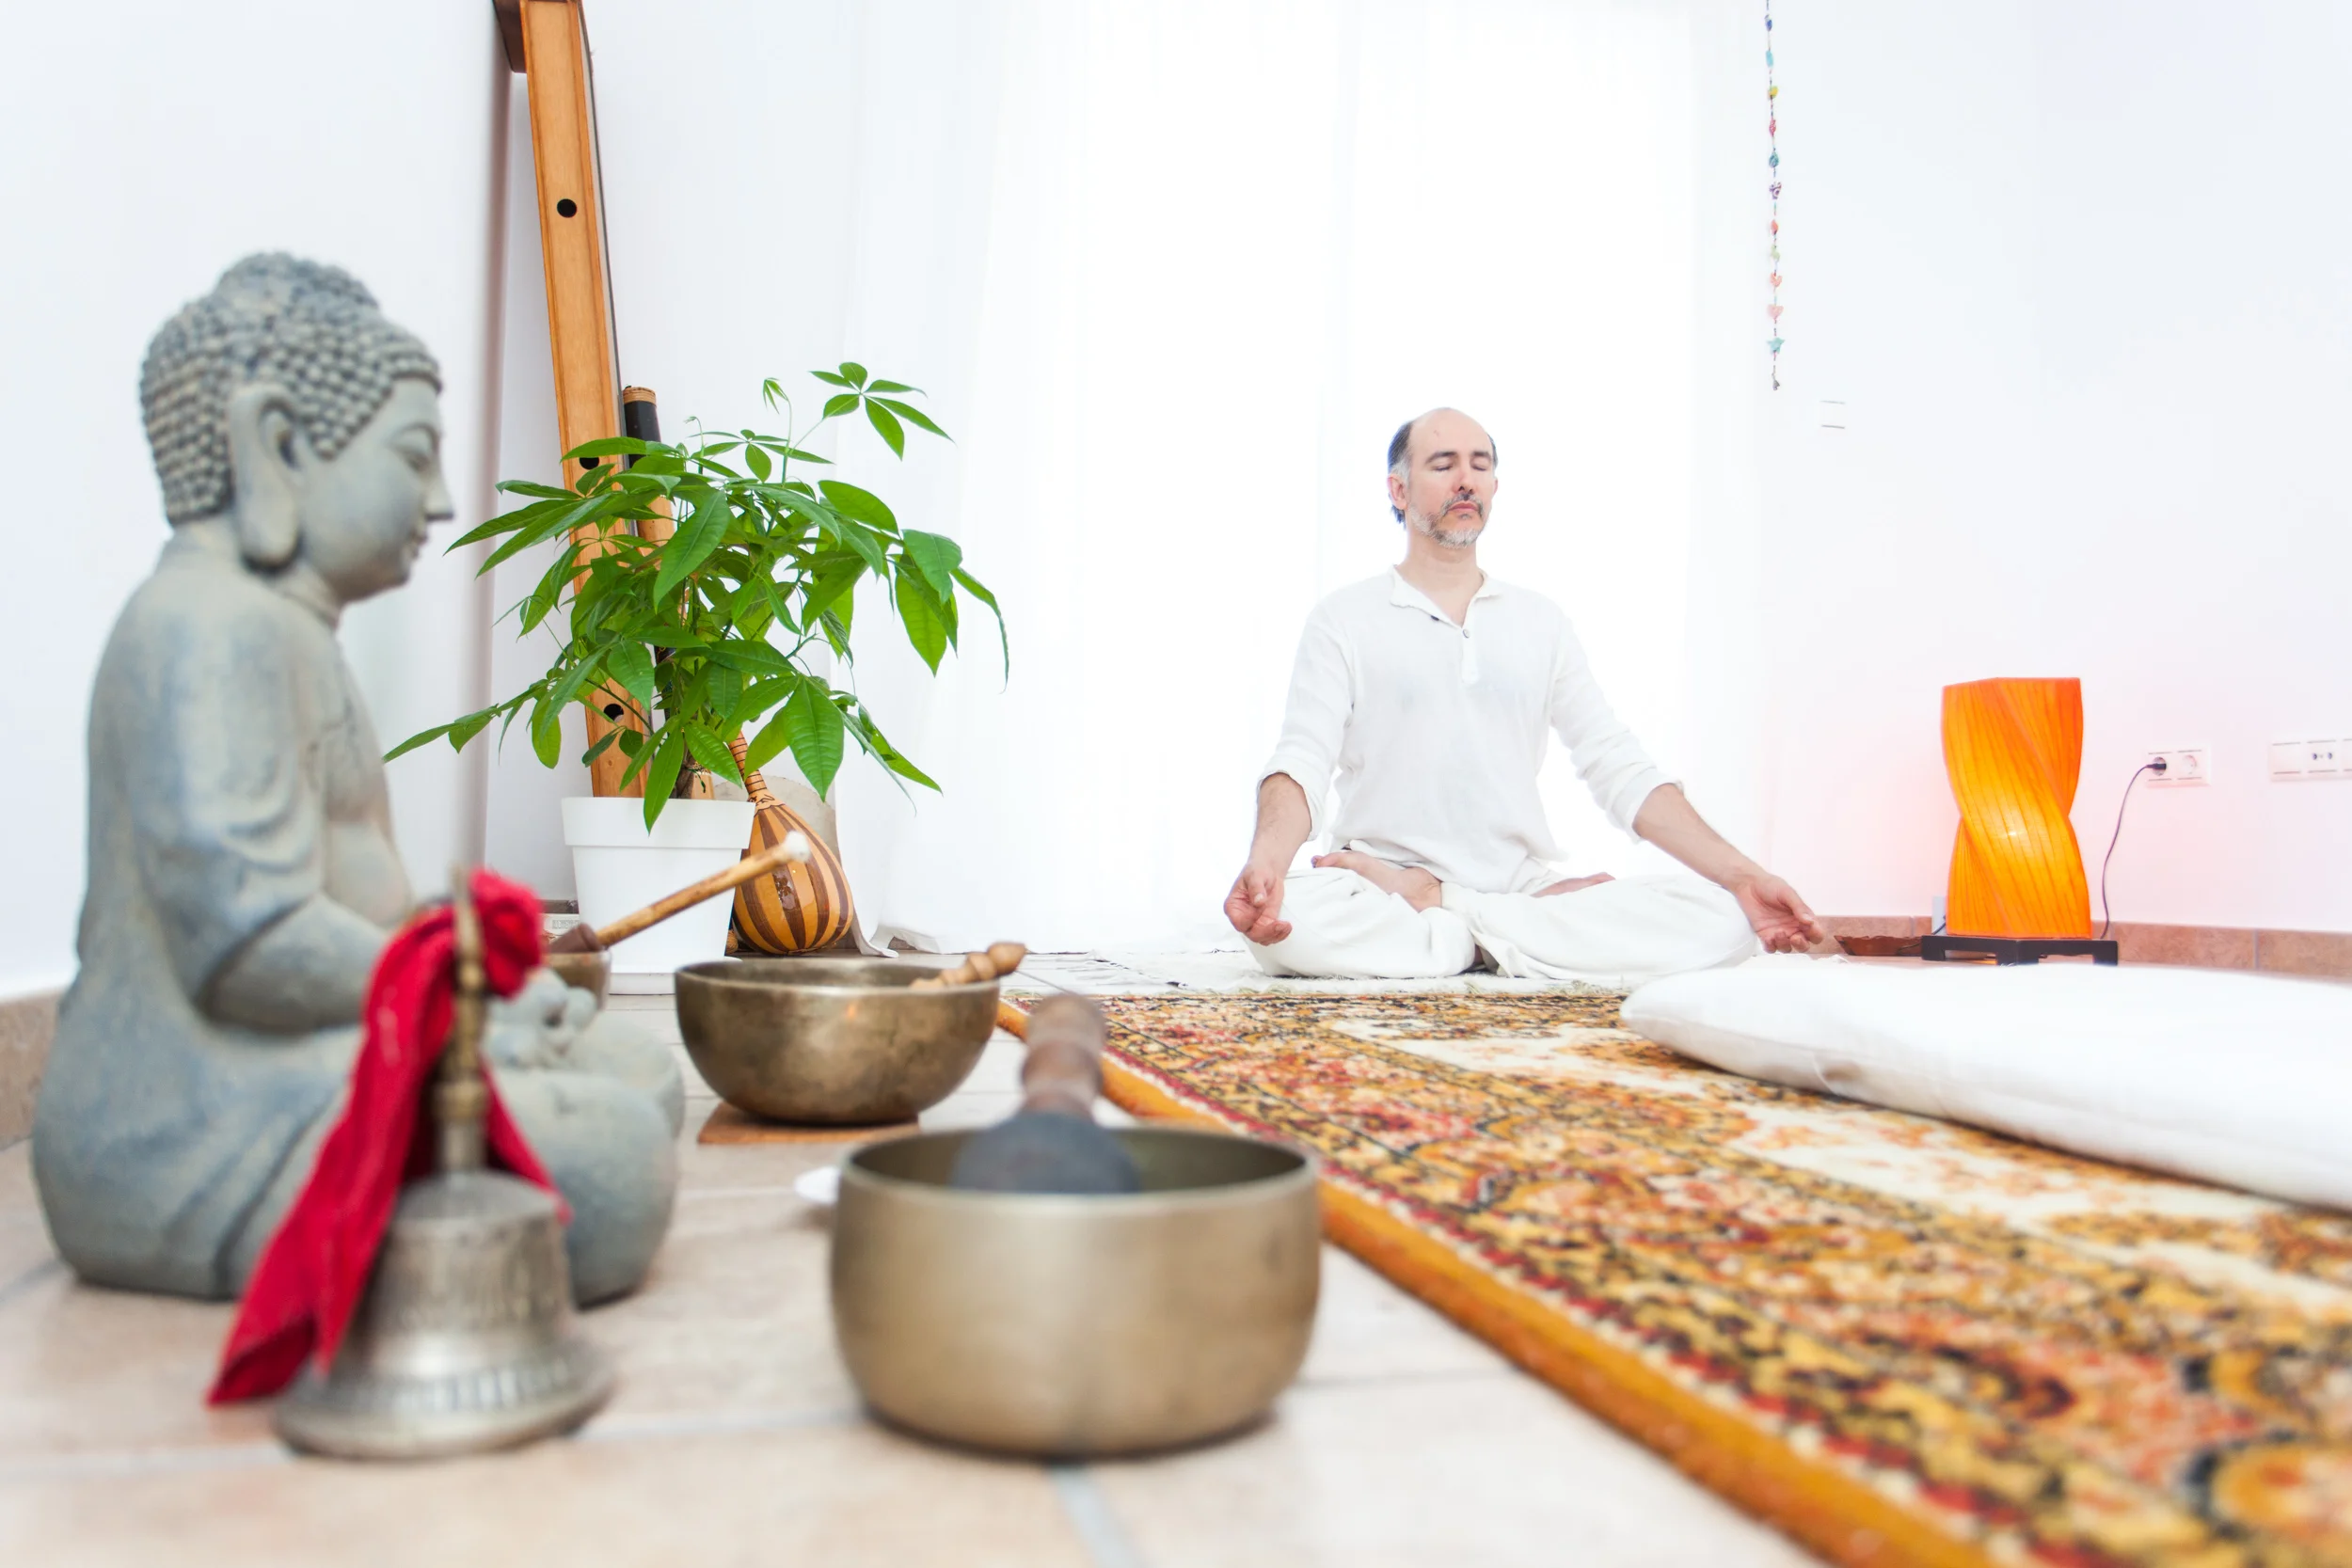 14 day ayurvedic abhyangam massage complete course program in alicante, spain381707725307.webp